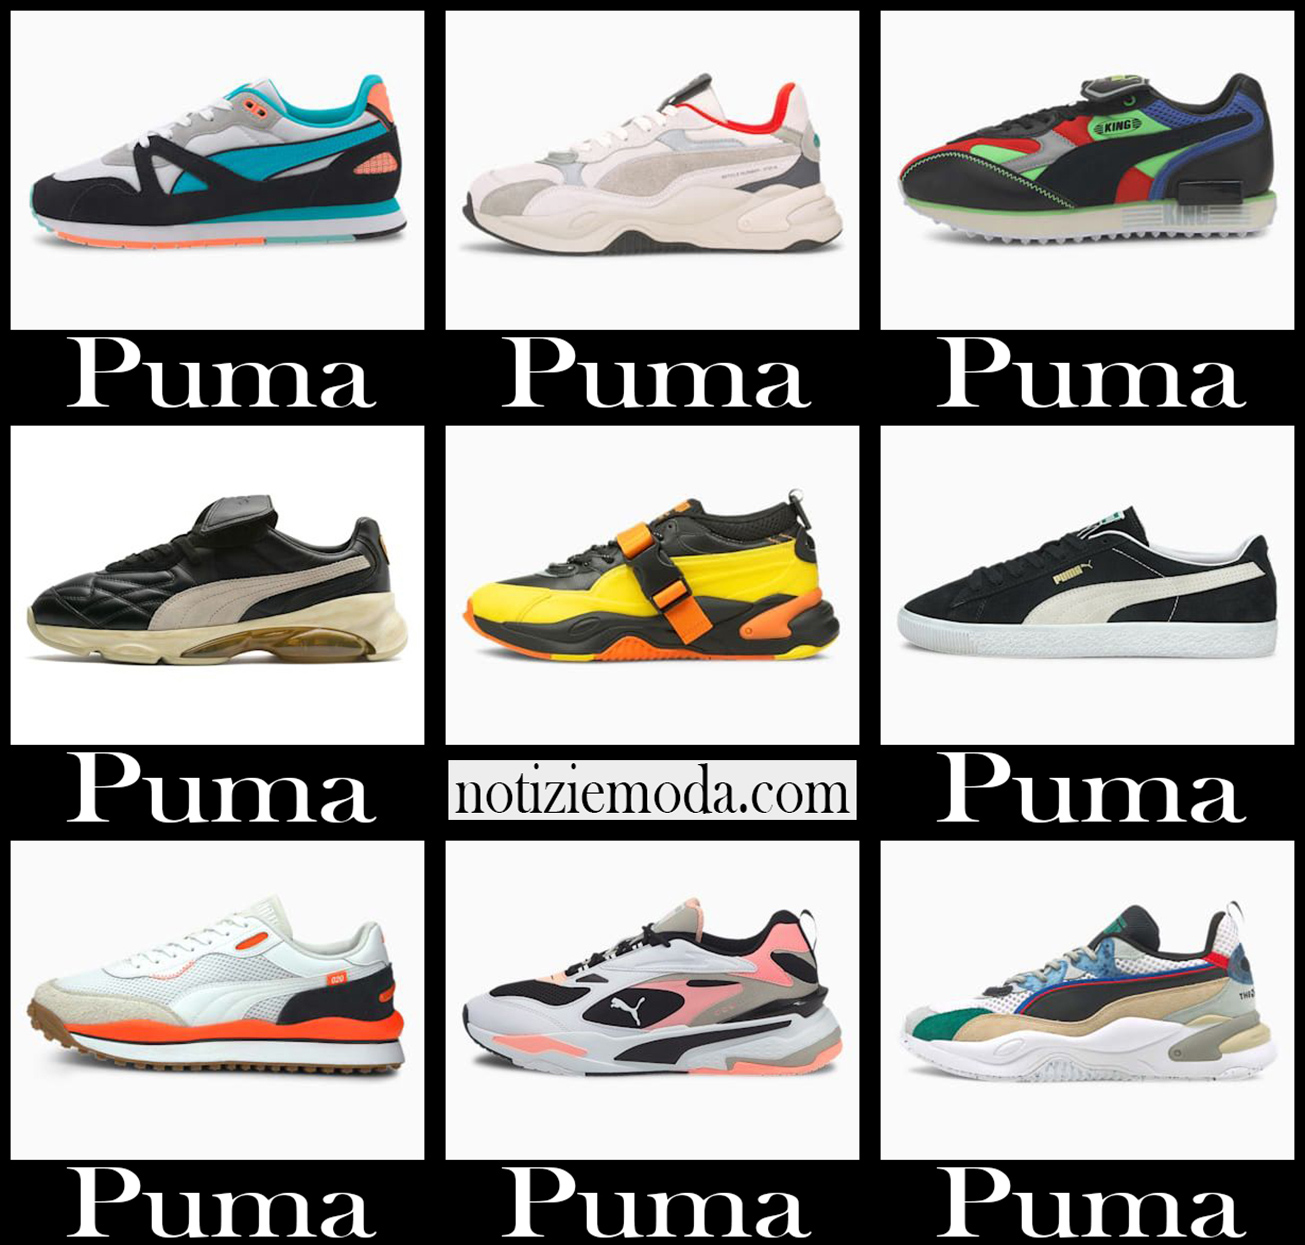 Nuovi arrivi sneakers Puma 2021 calzature moda uomo